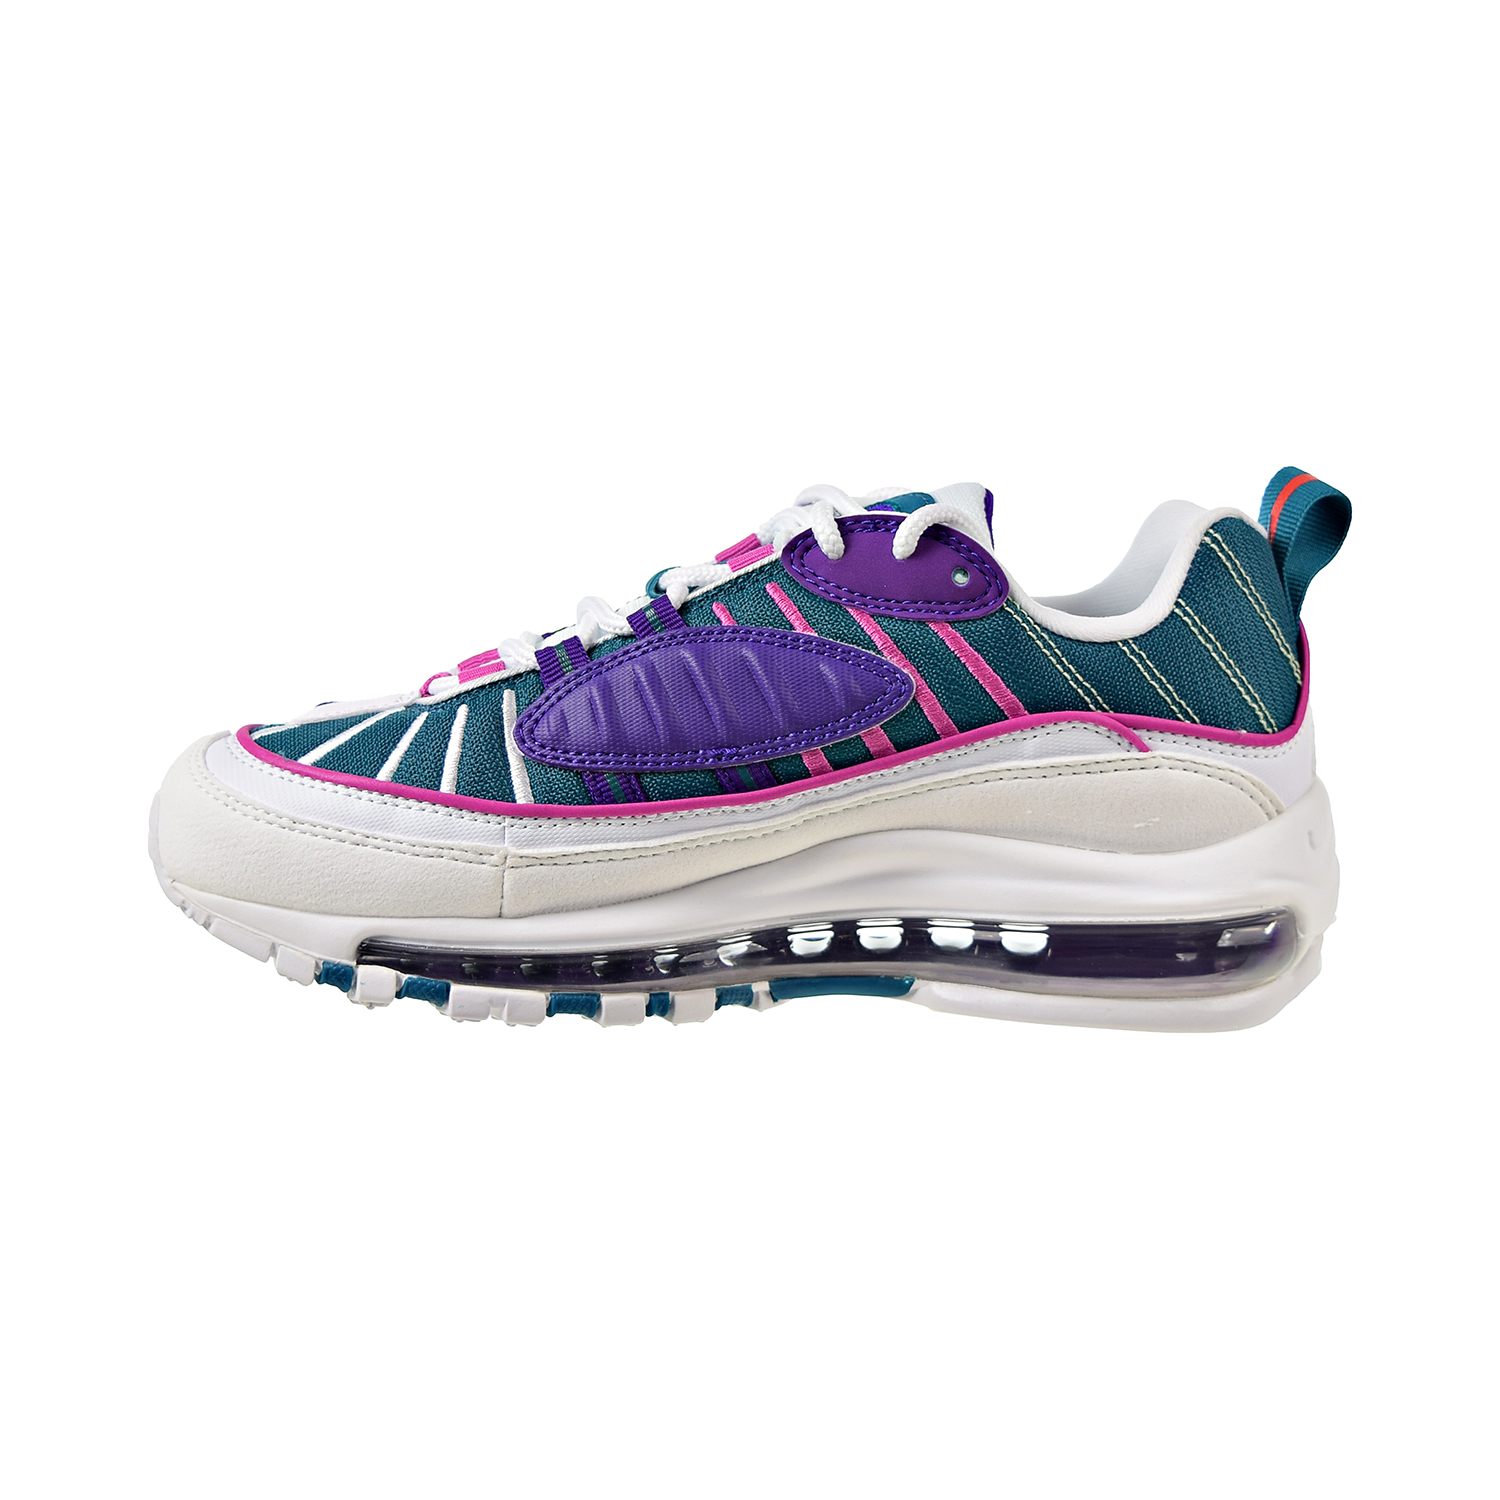 Nike Air Max 98 Women's Shoes Bright Spruce-Fuchsia-Voltage Purple